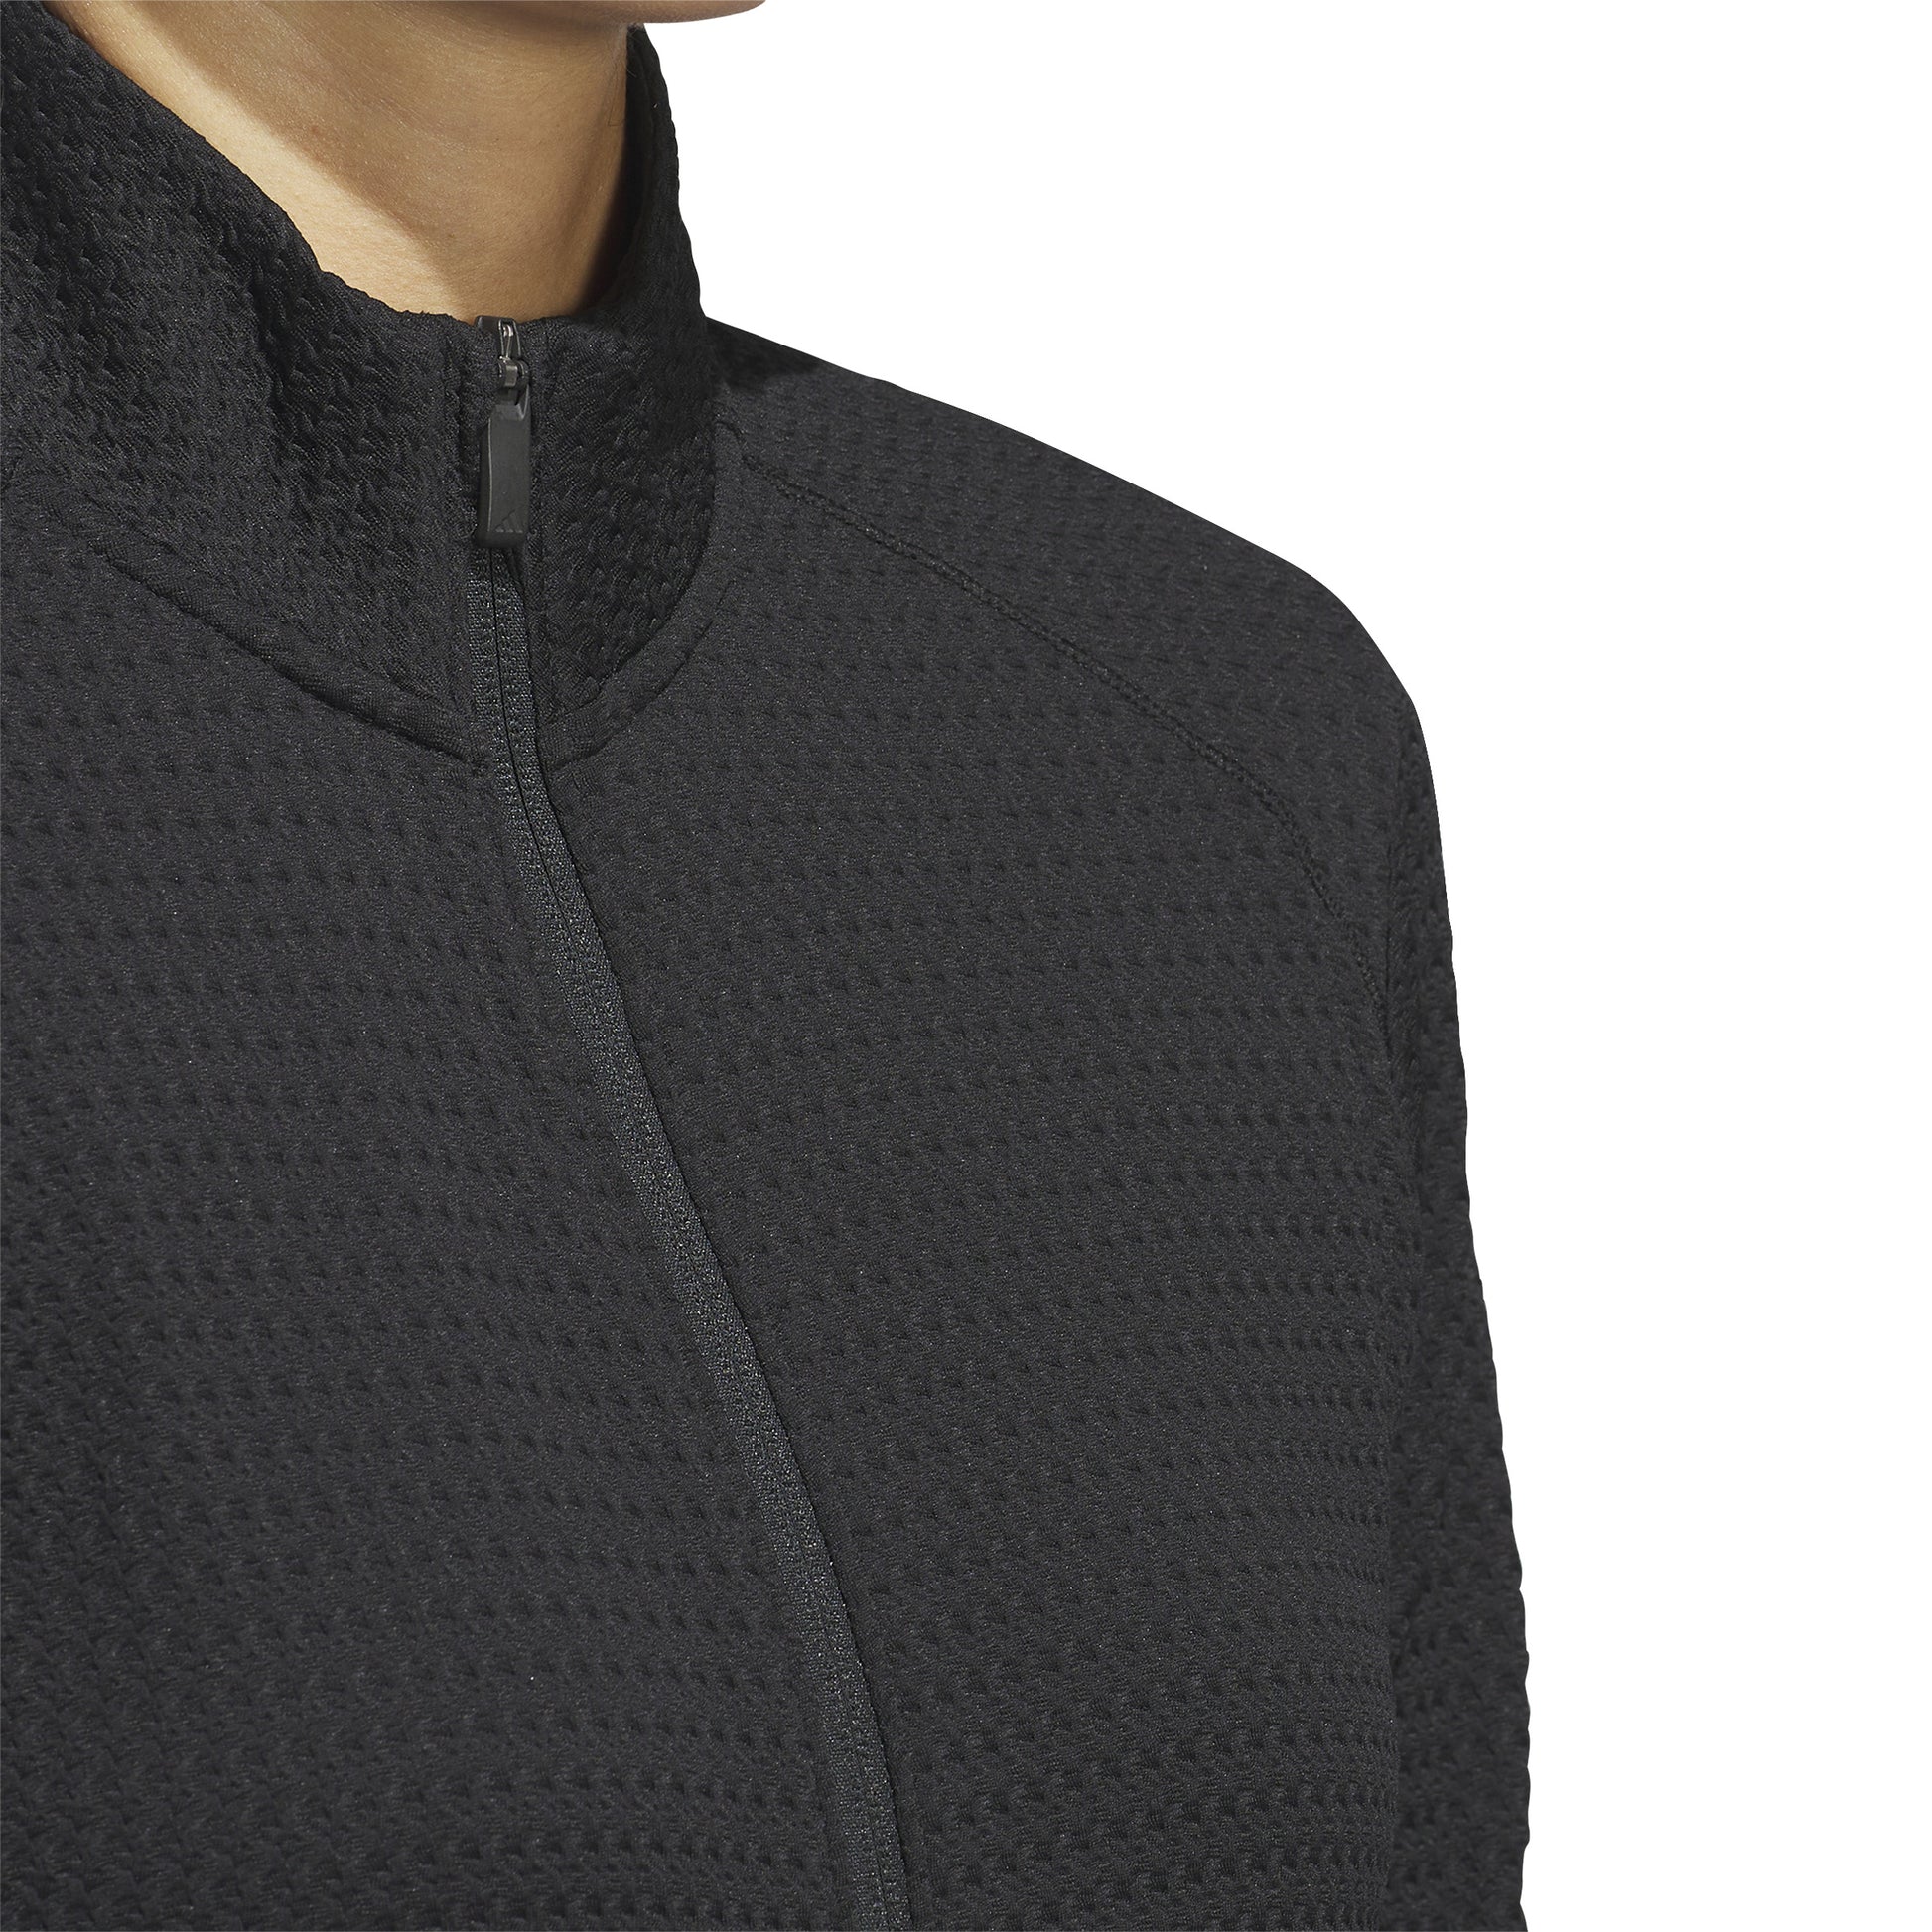 adidas Ladies Waffle-Knit Golf Jacket in Black